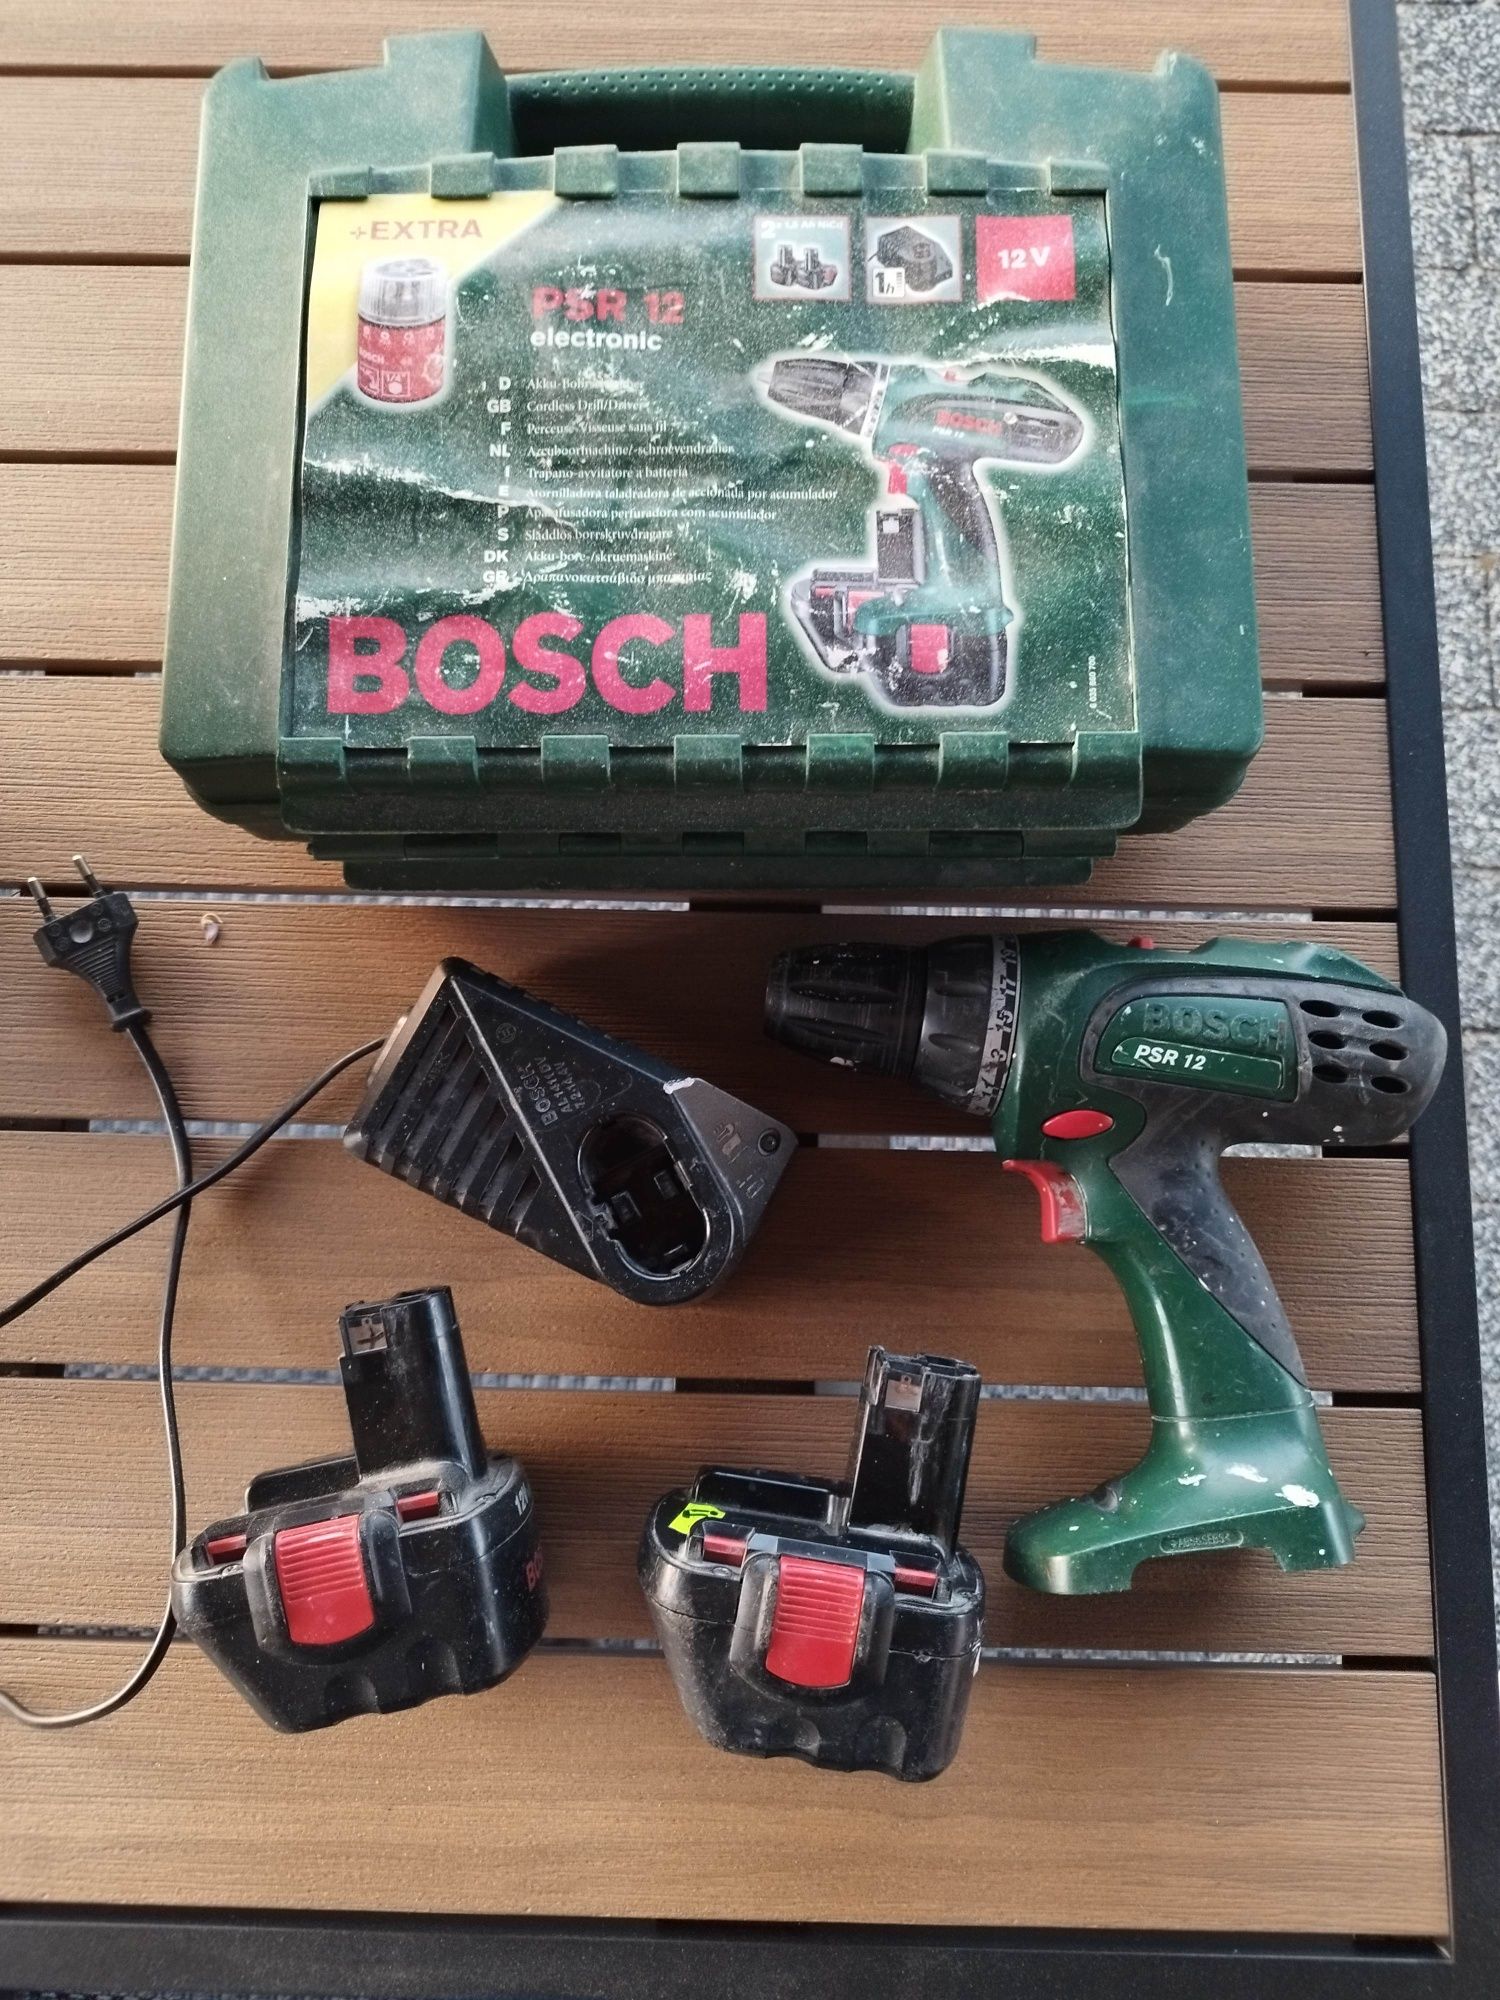 Wkrętarka Bosch akumulatotmrowa 12V Bosch PSR 12 v zestaw